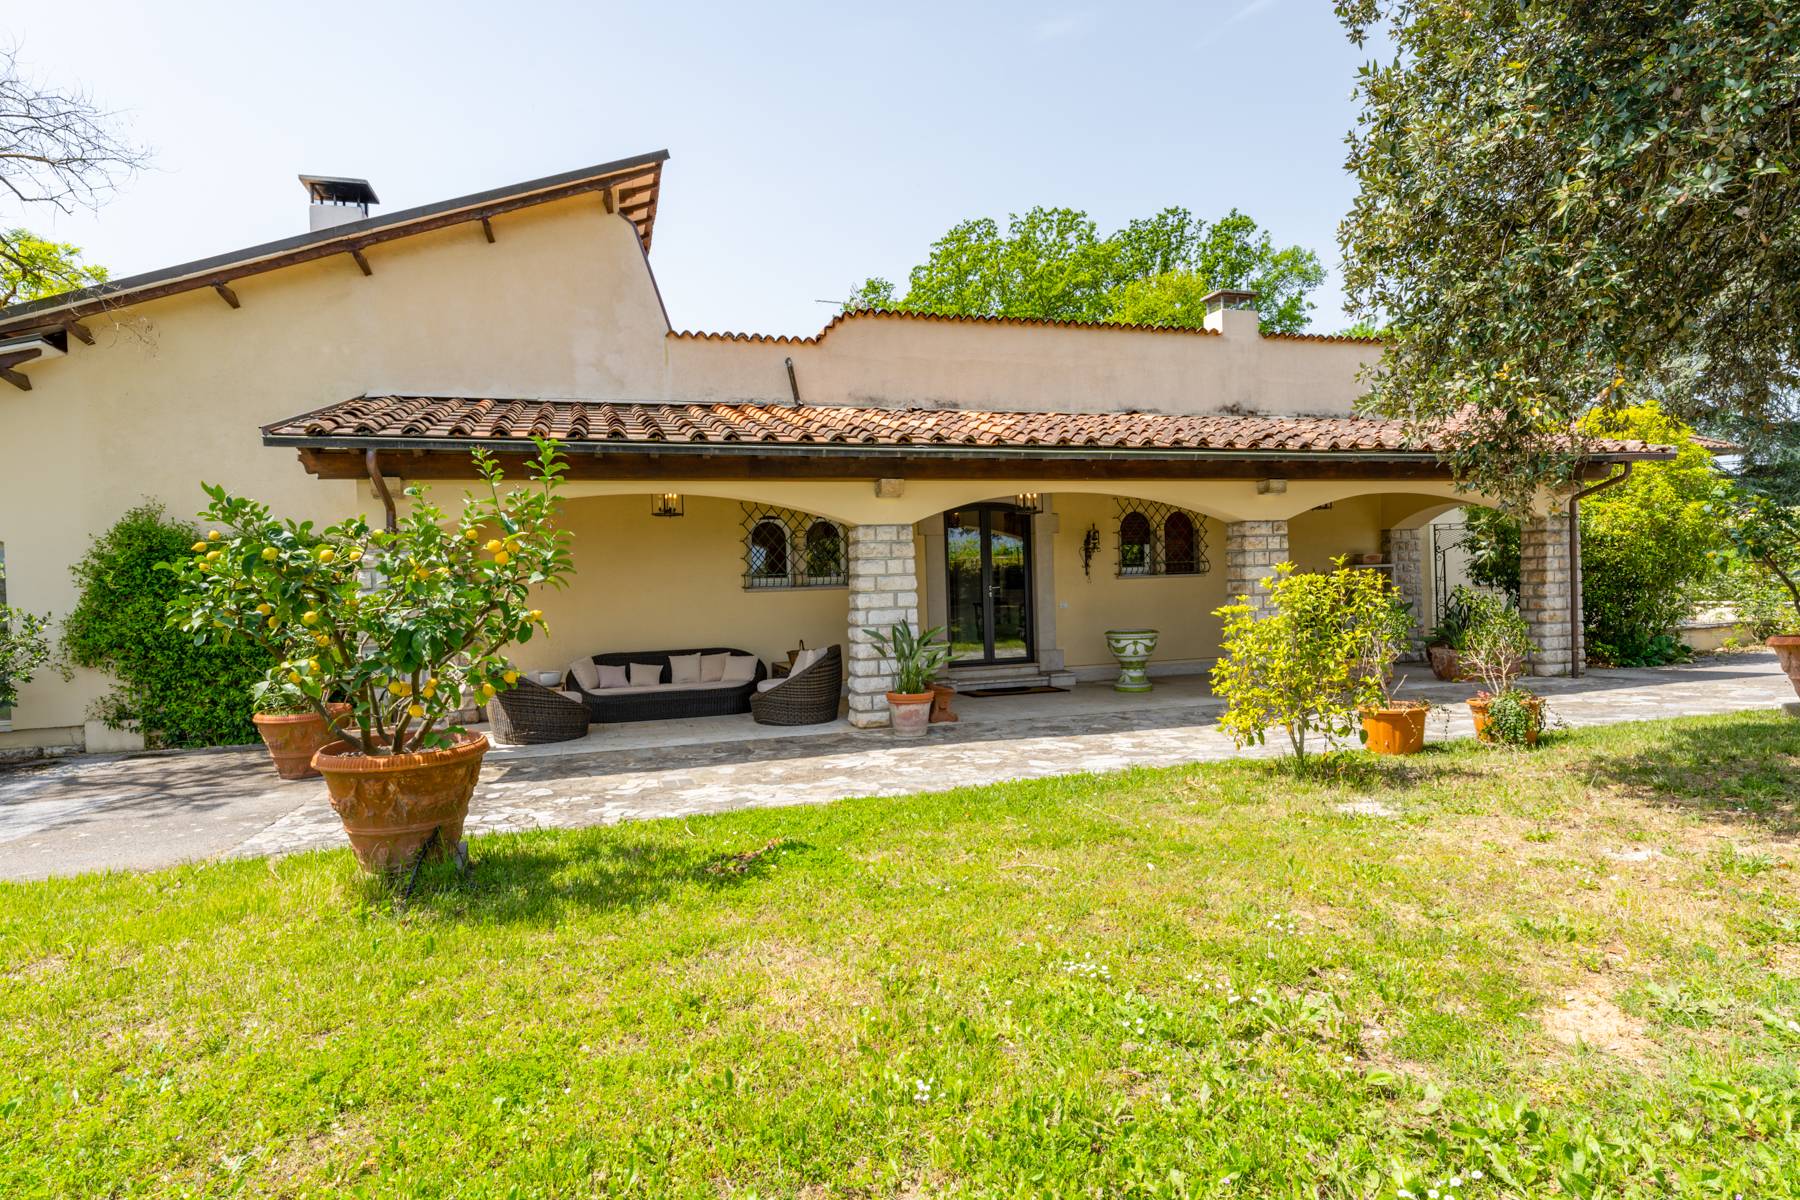 Villa in Vendita a Lucca: 4 locali, 930 mq - Foto 4